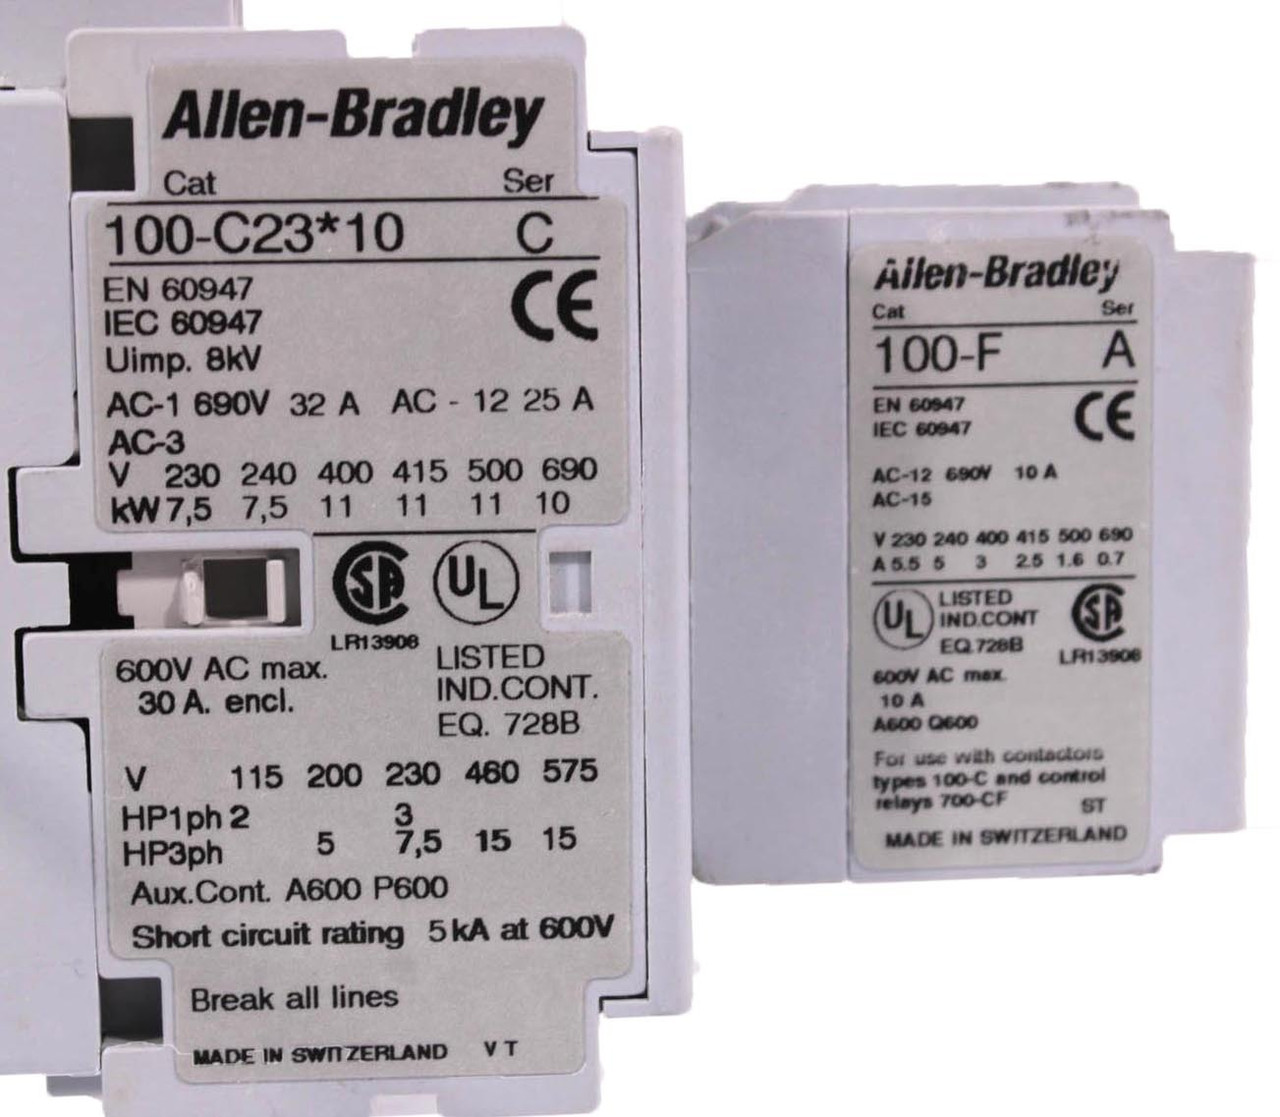 Allen-Bradley 100-C23*10 Ser C Contactor W/ Auxiliary Contact Block 100-F Ser A